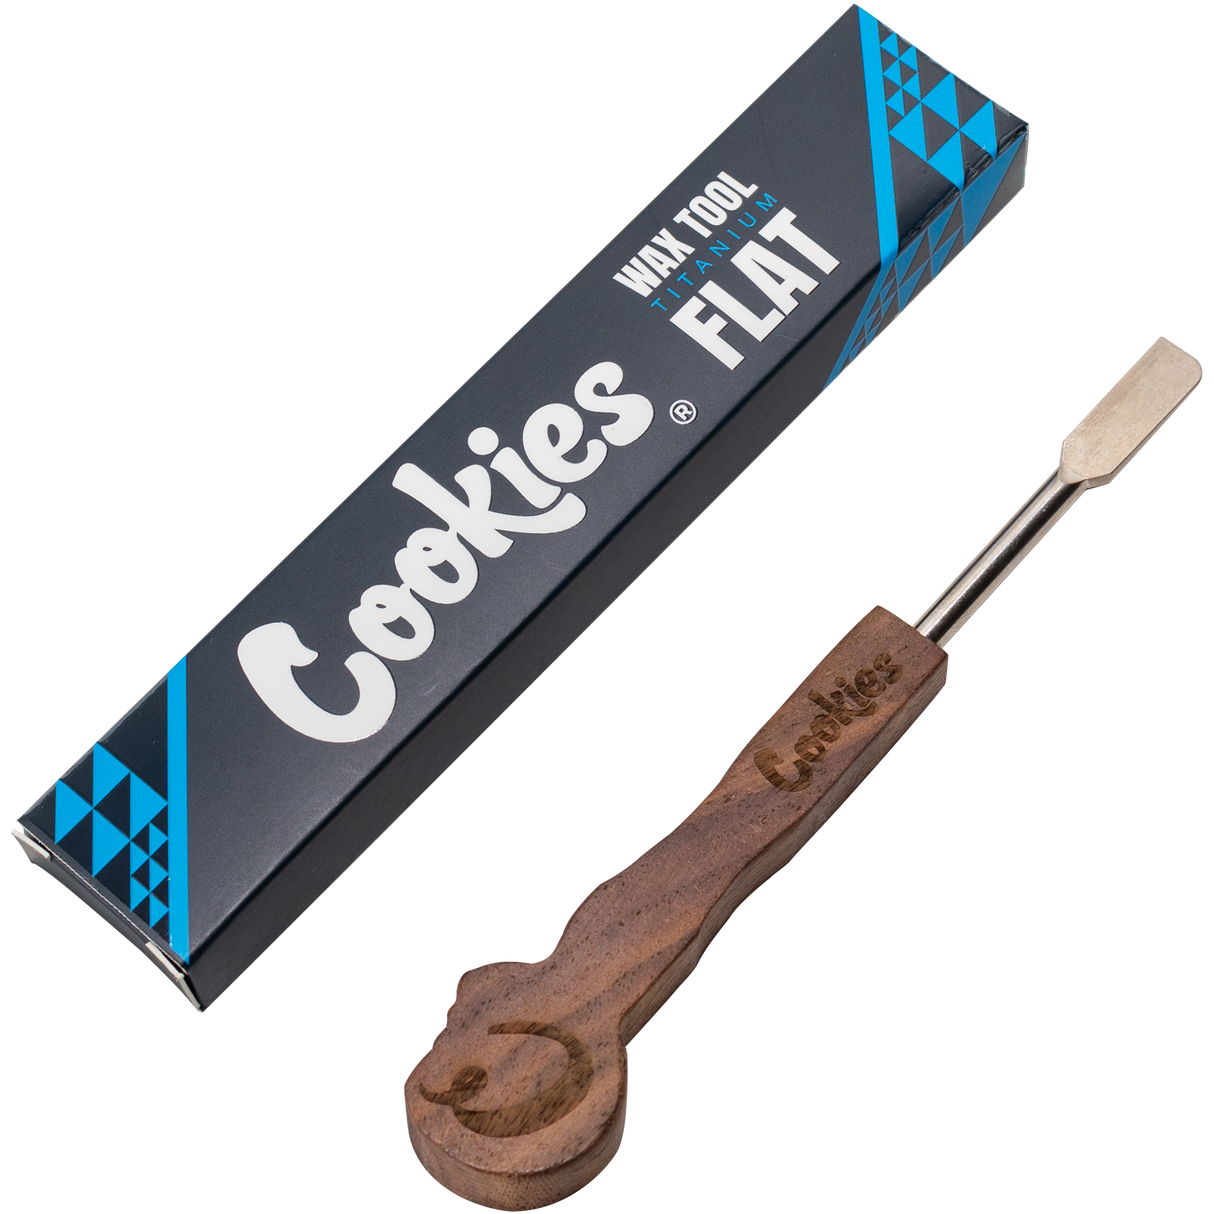 Cookies Titanium Flat Wax Tool with wooden handle beside packaging